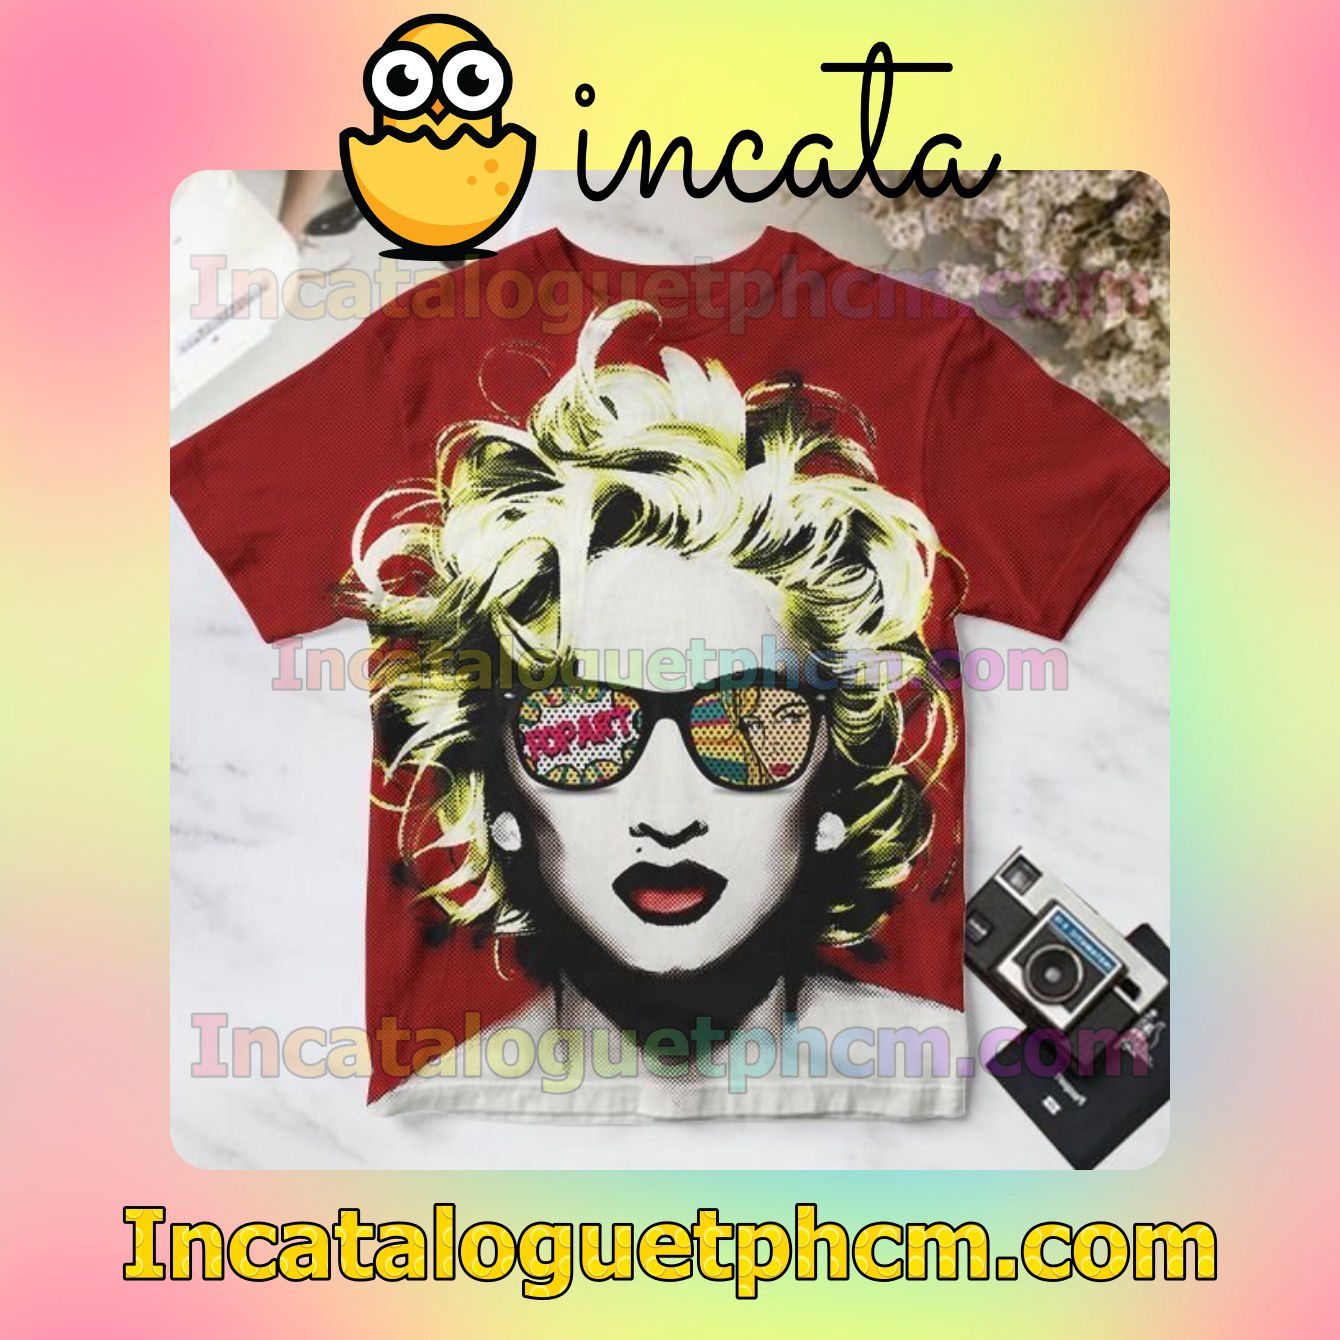 Madonna Wearing Glass Pop Art Red Personalized Shirt